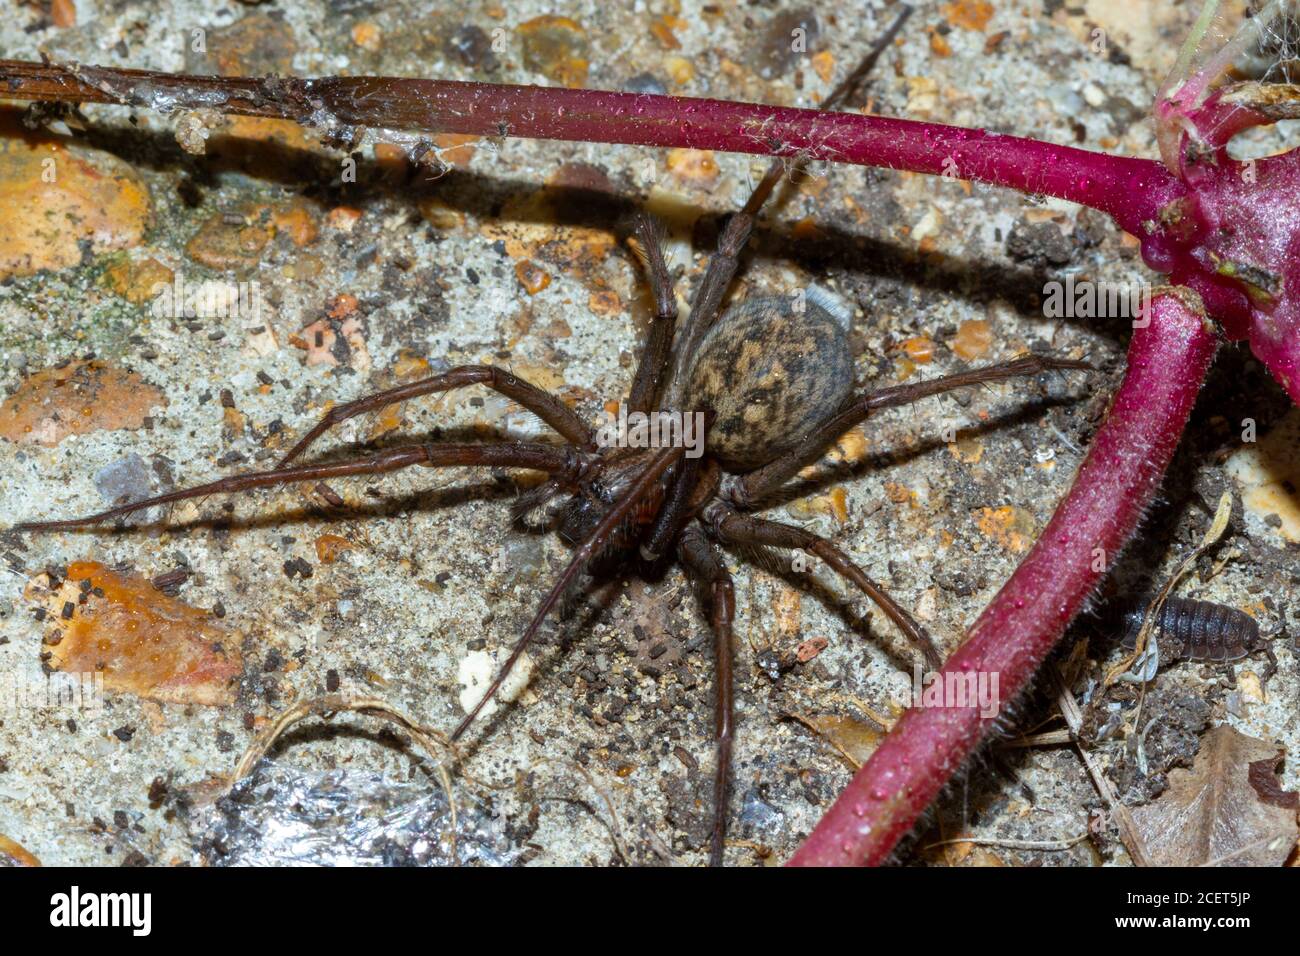 Giant house spider (Eratigena atrica) Sussex garden, UK Stock Photo